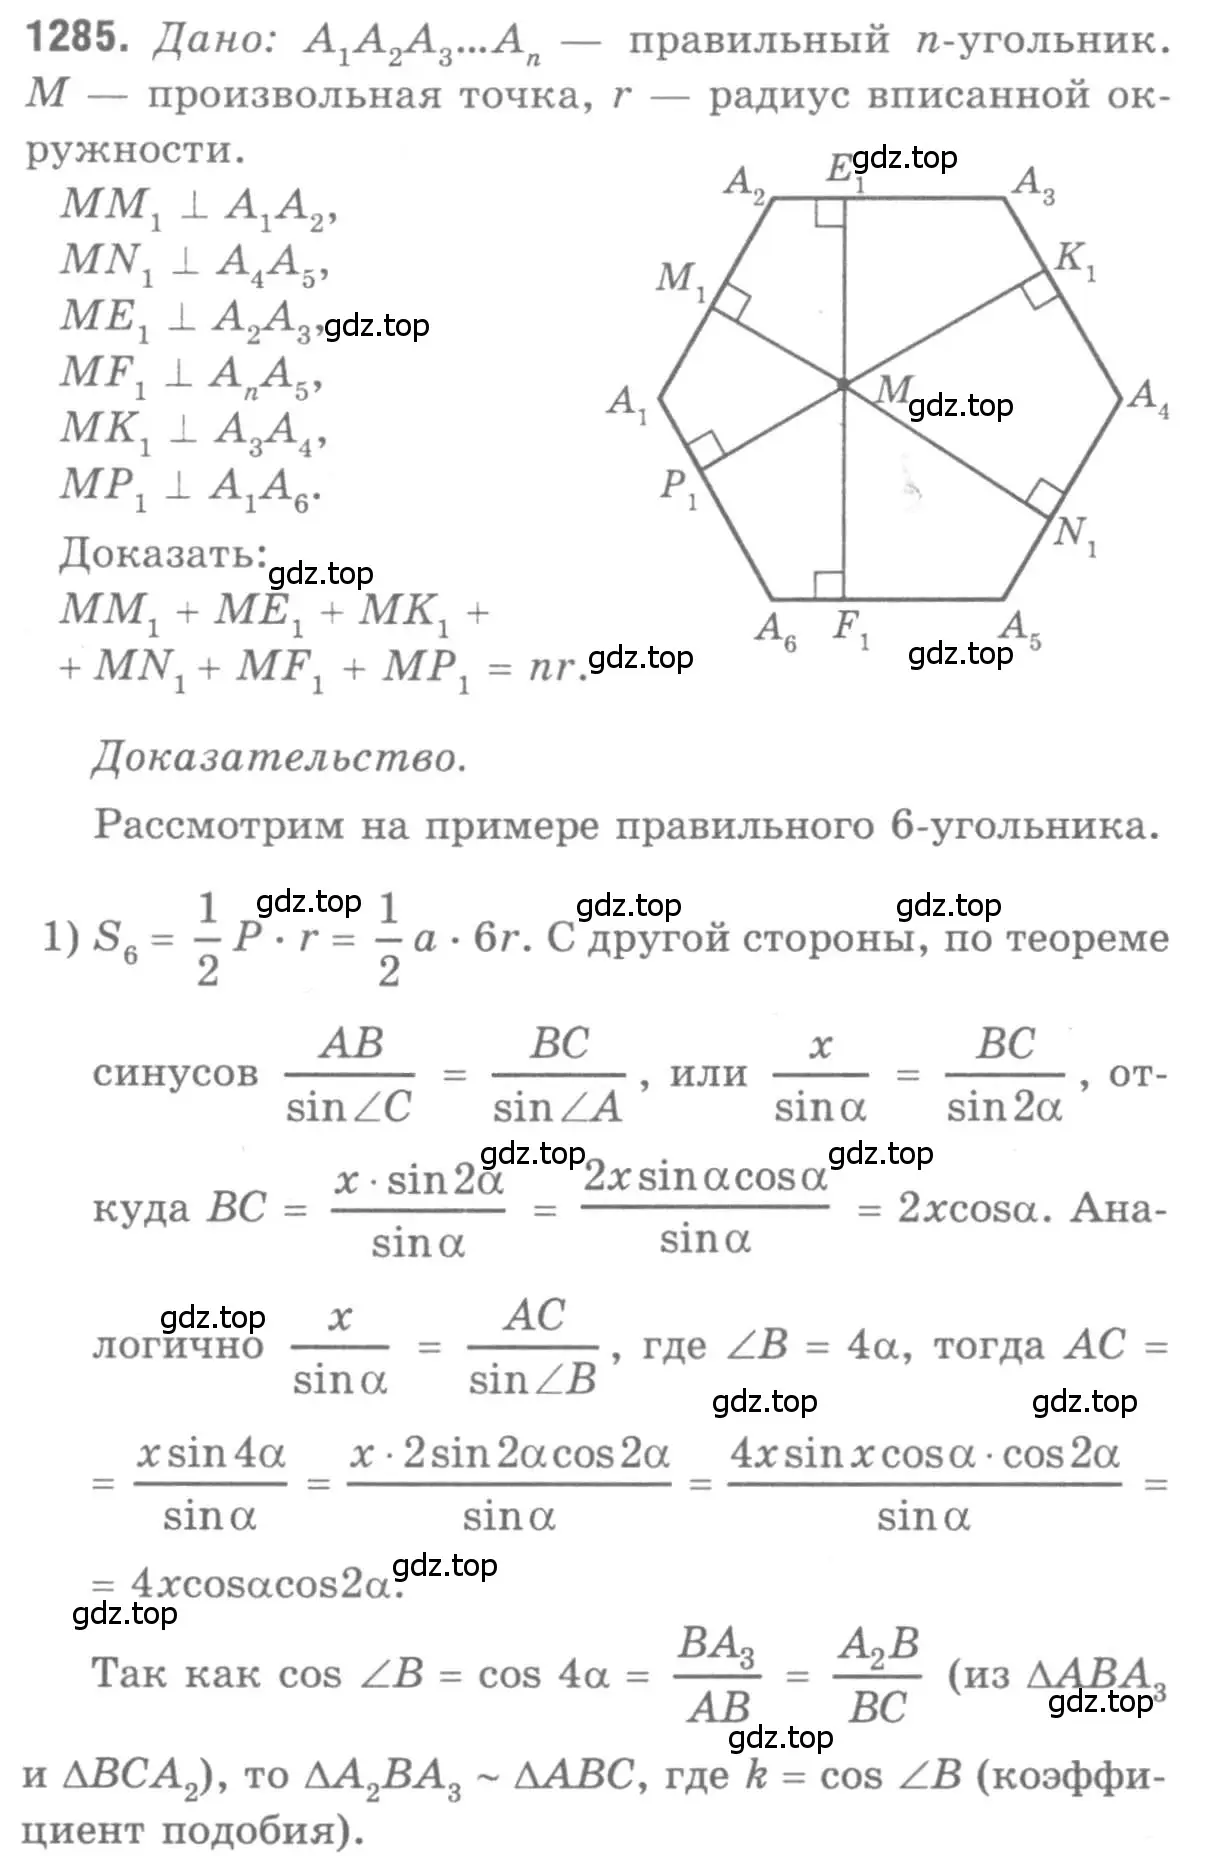 Решение 9. номер 1285 (страница 332) гдз по геометрии 7-9 класс Атанасян, Бутузов, учебник